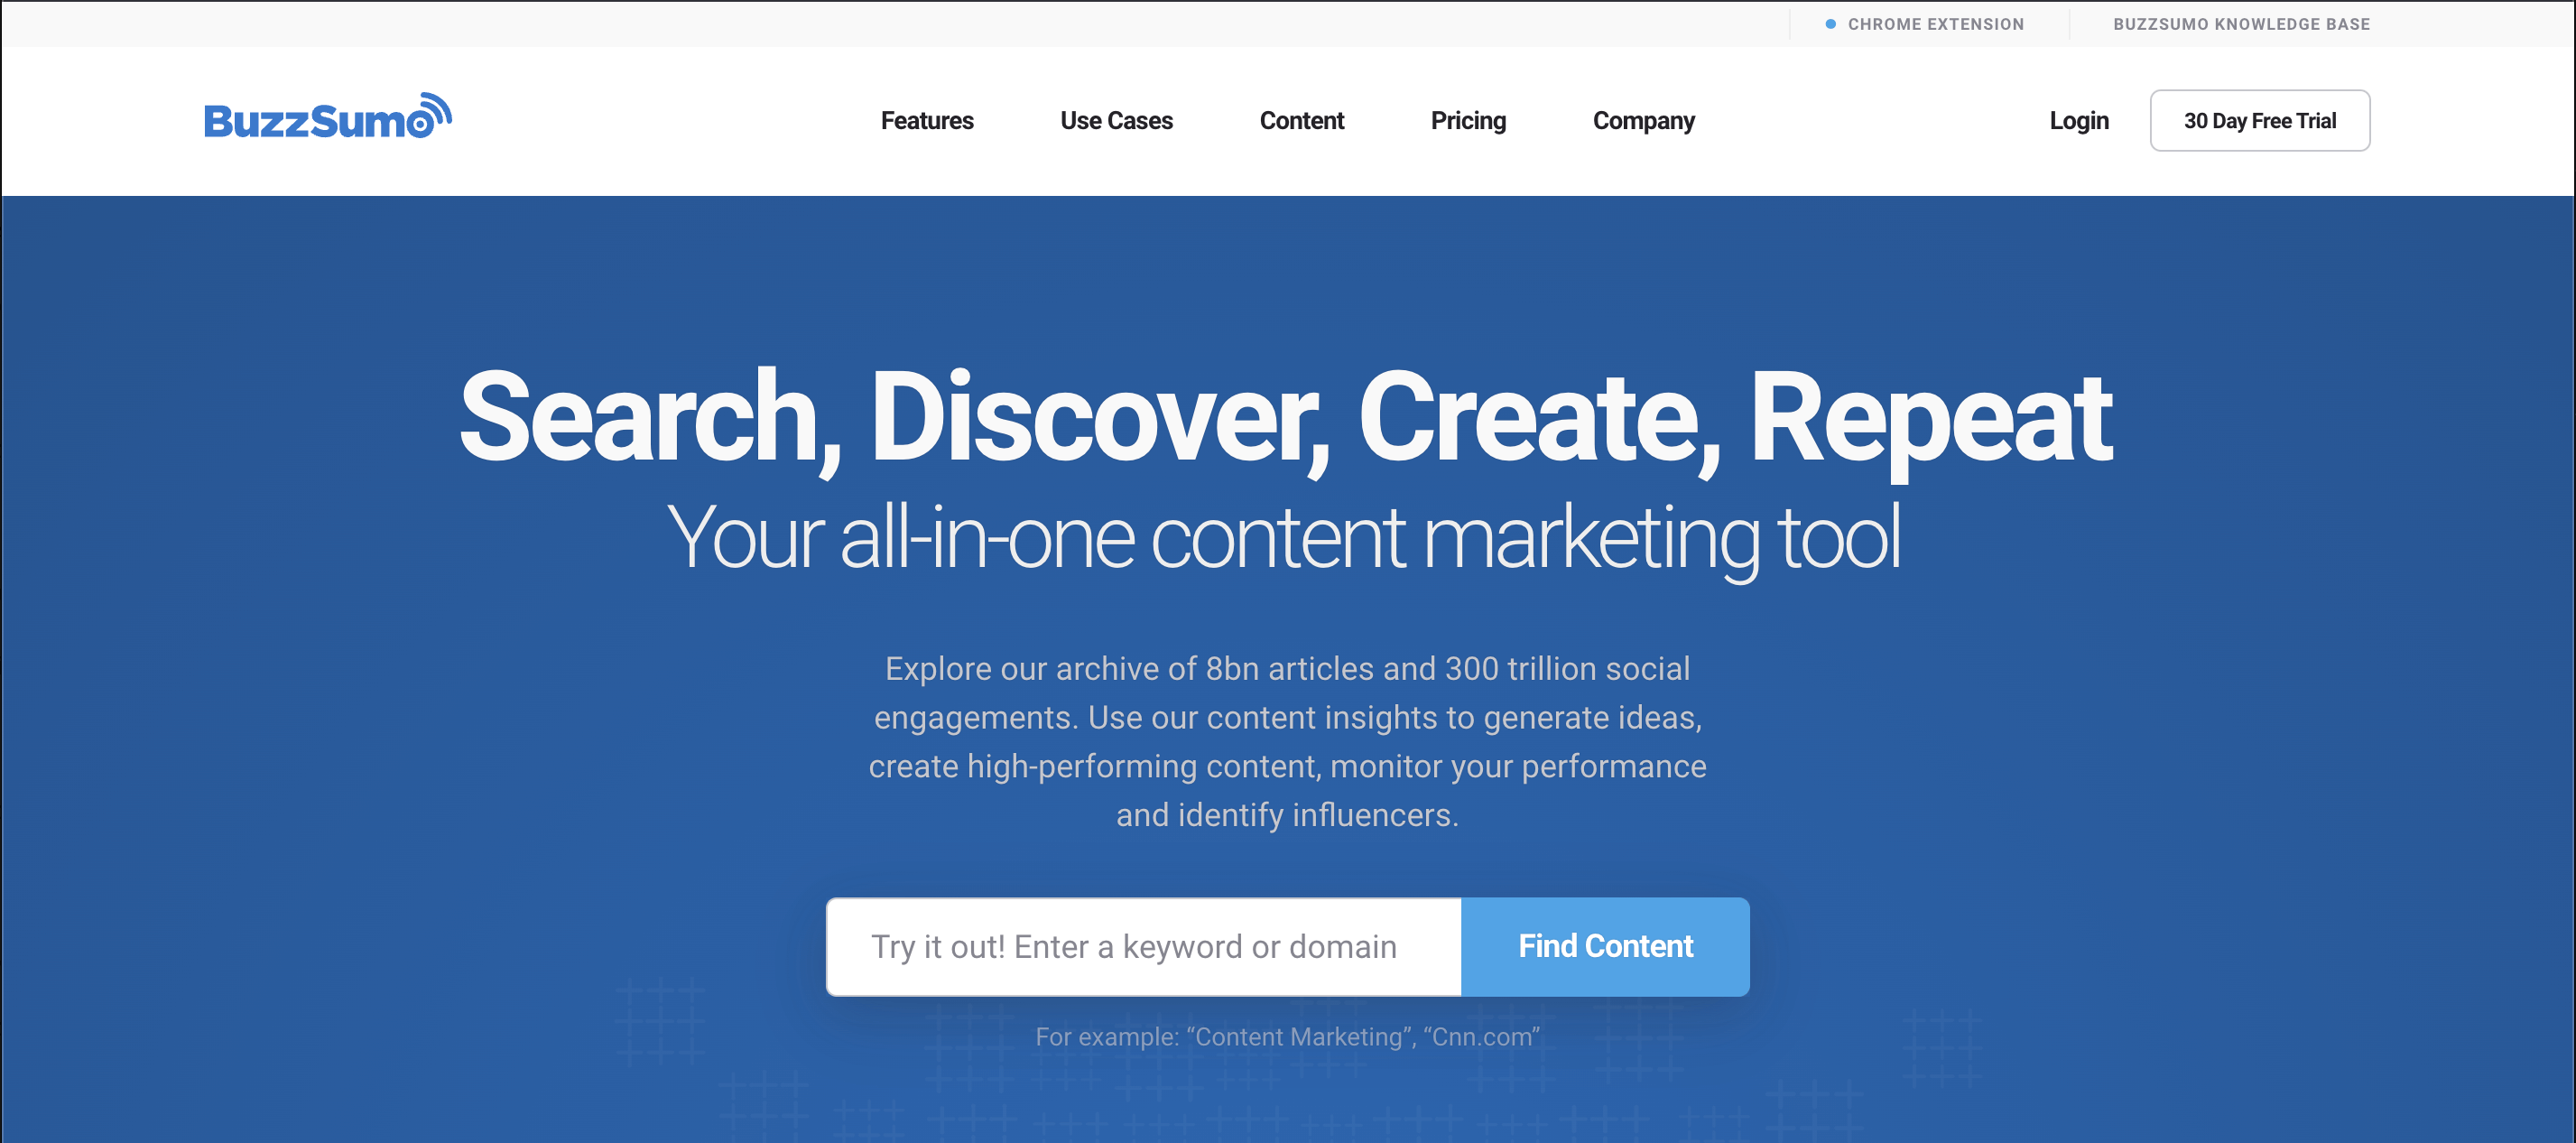 BuzzSumo's homepage